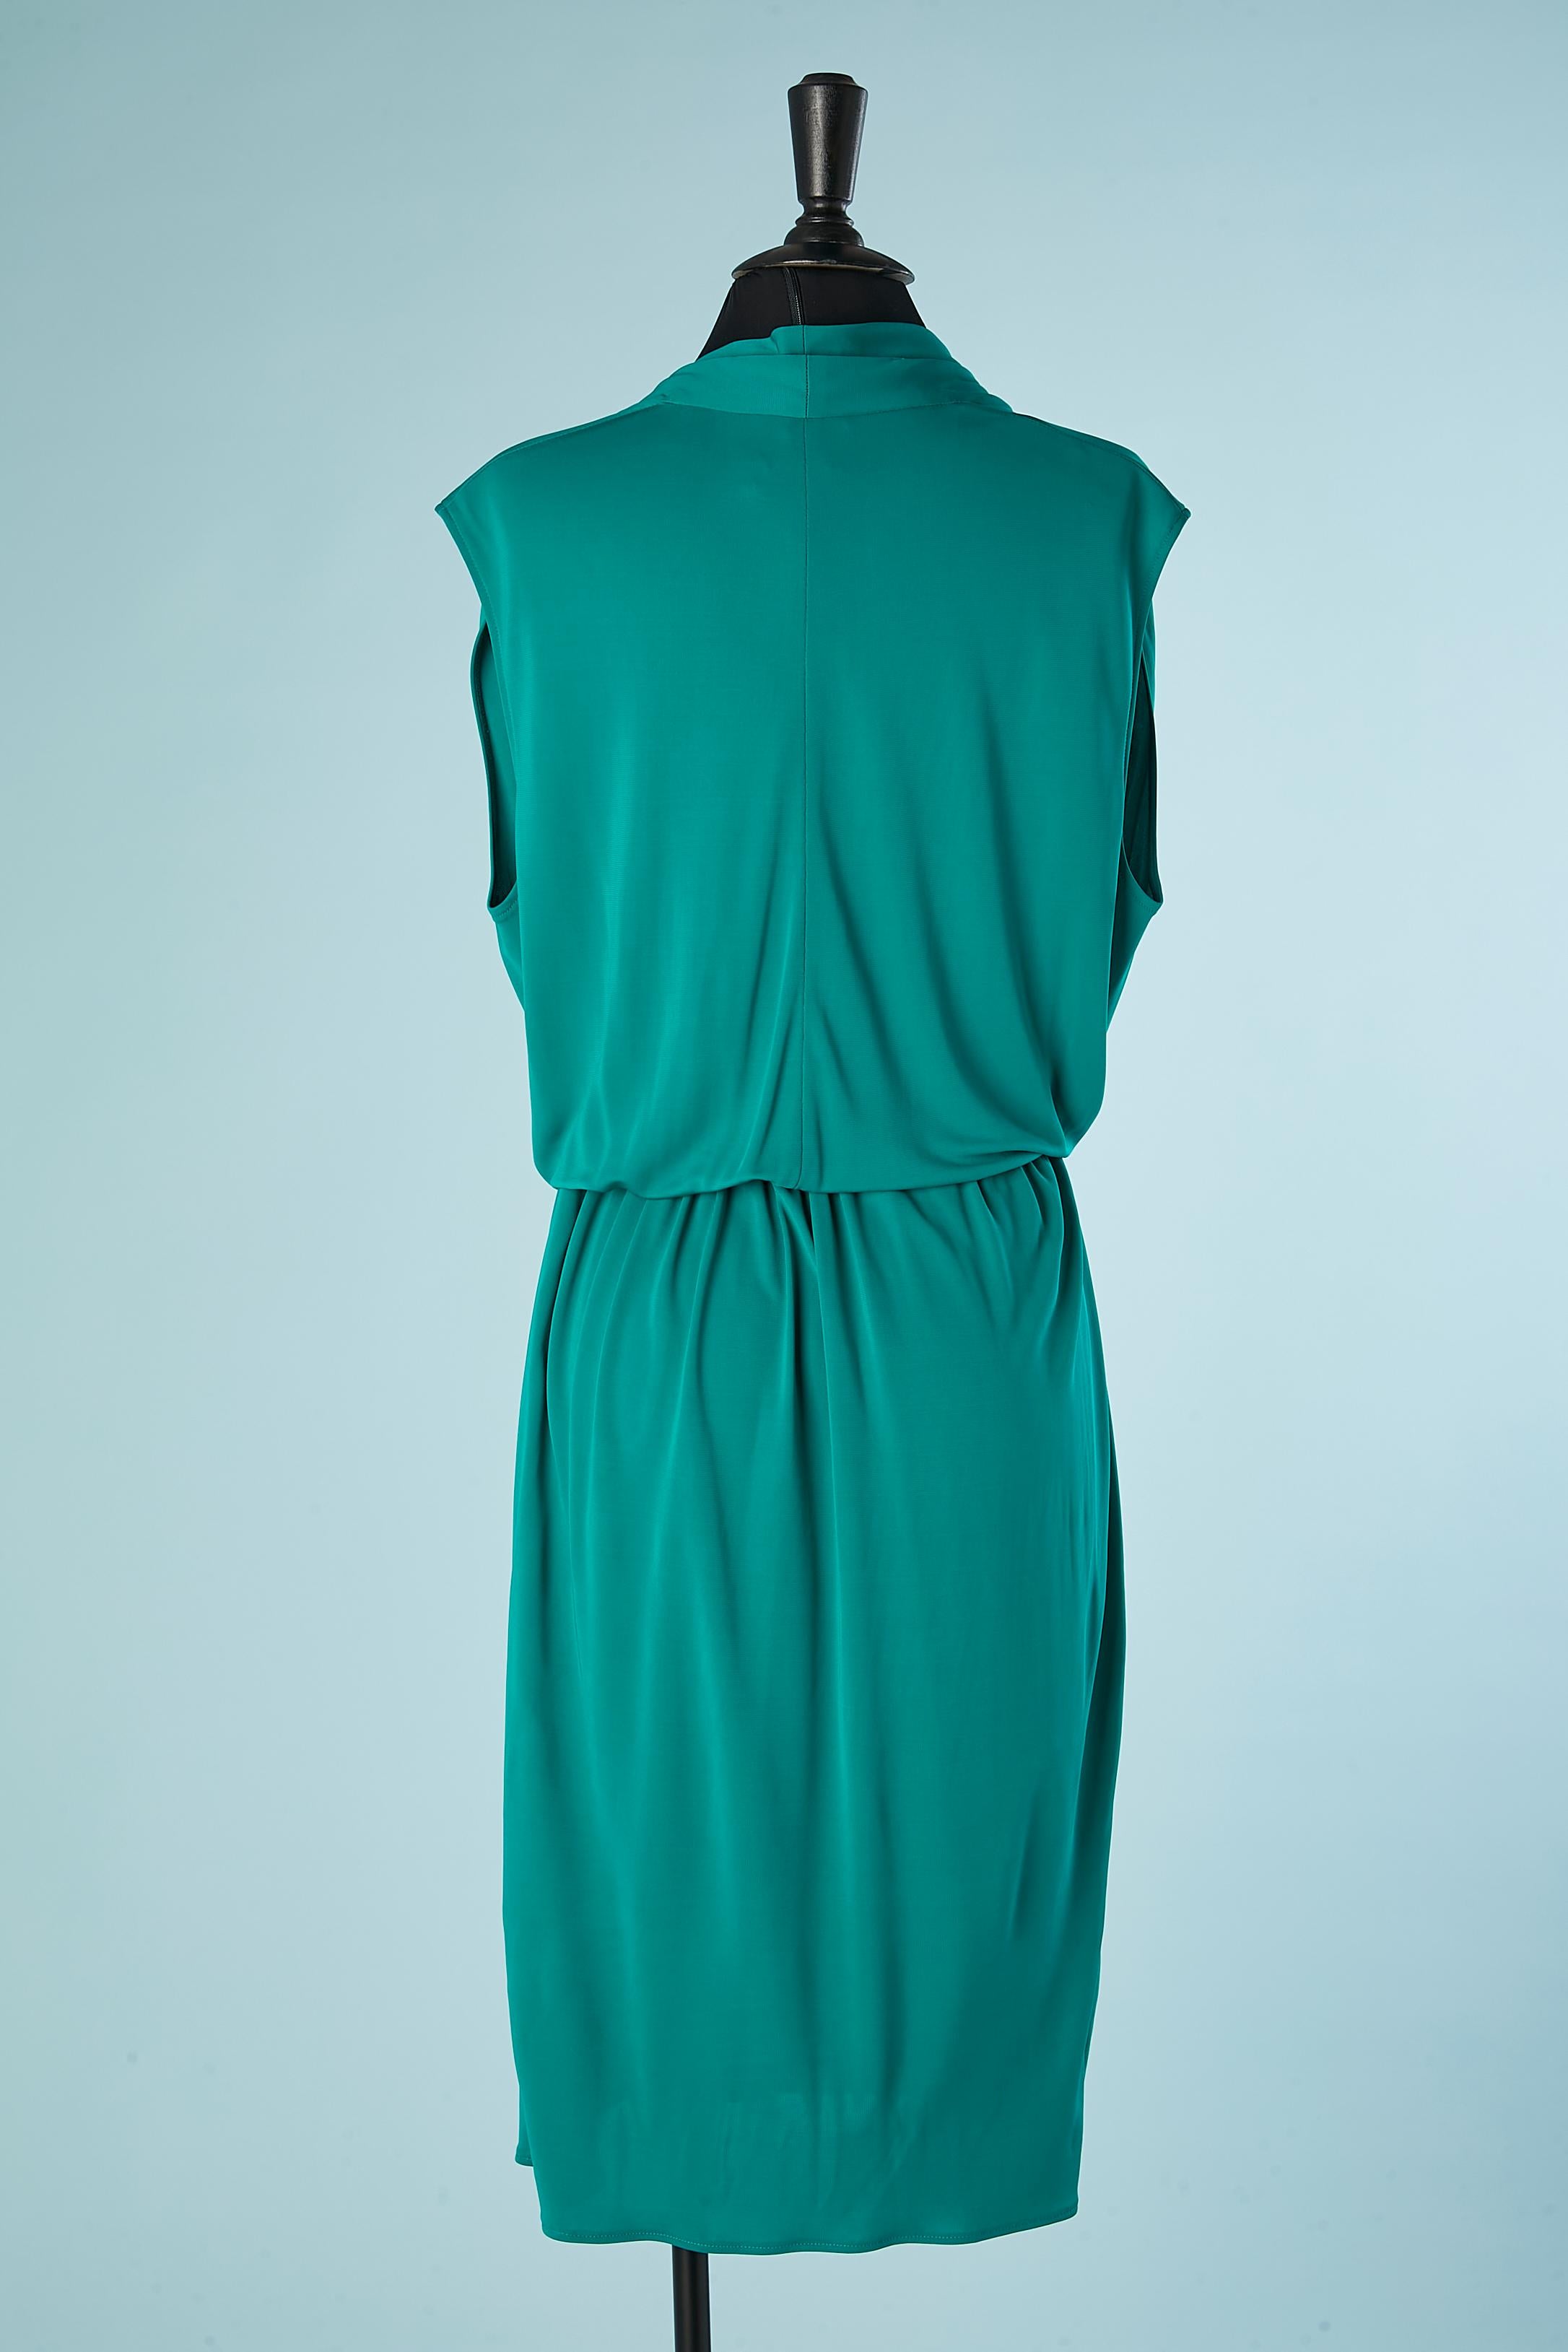 Women's Emerald green rayon draped cocktail dress Lanvin par Alber Elbaz  For Sale